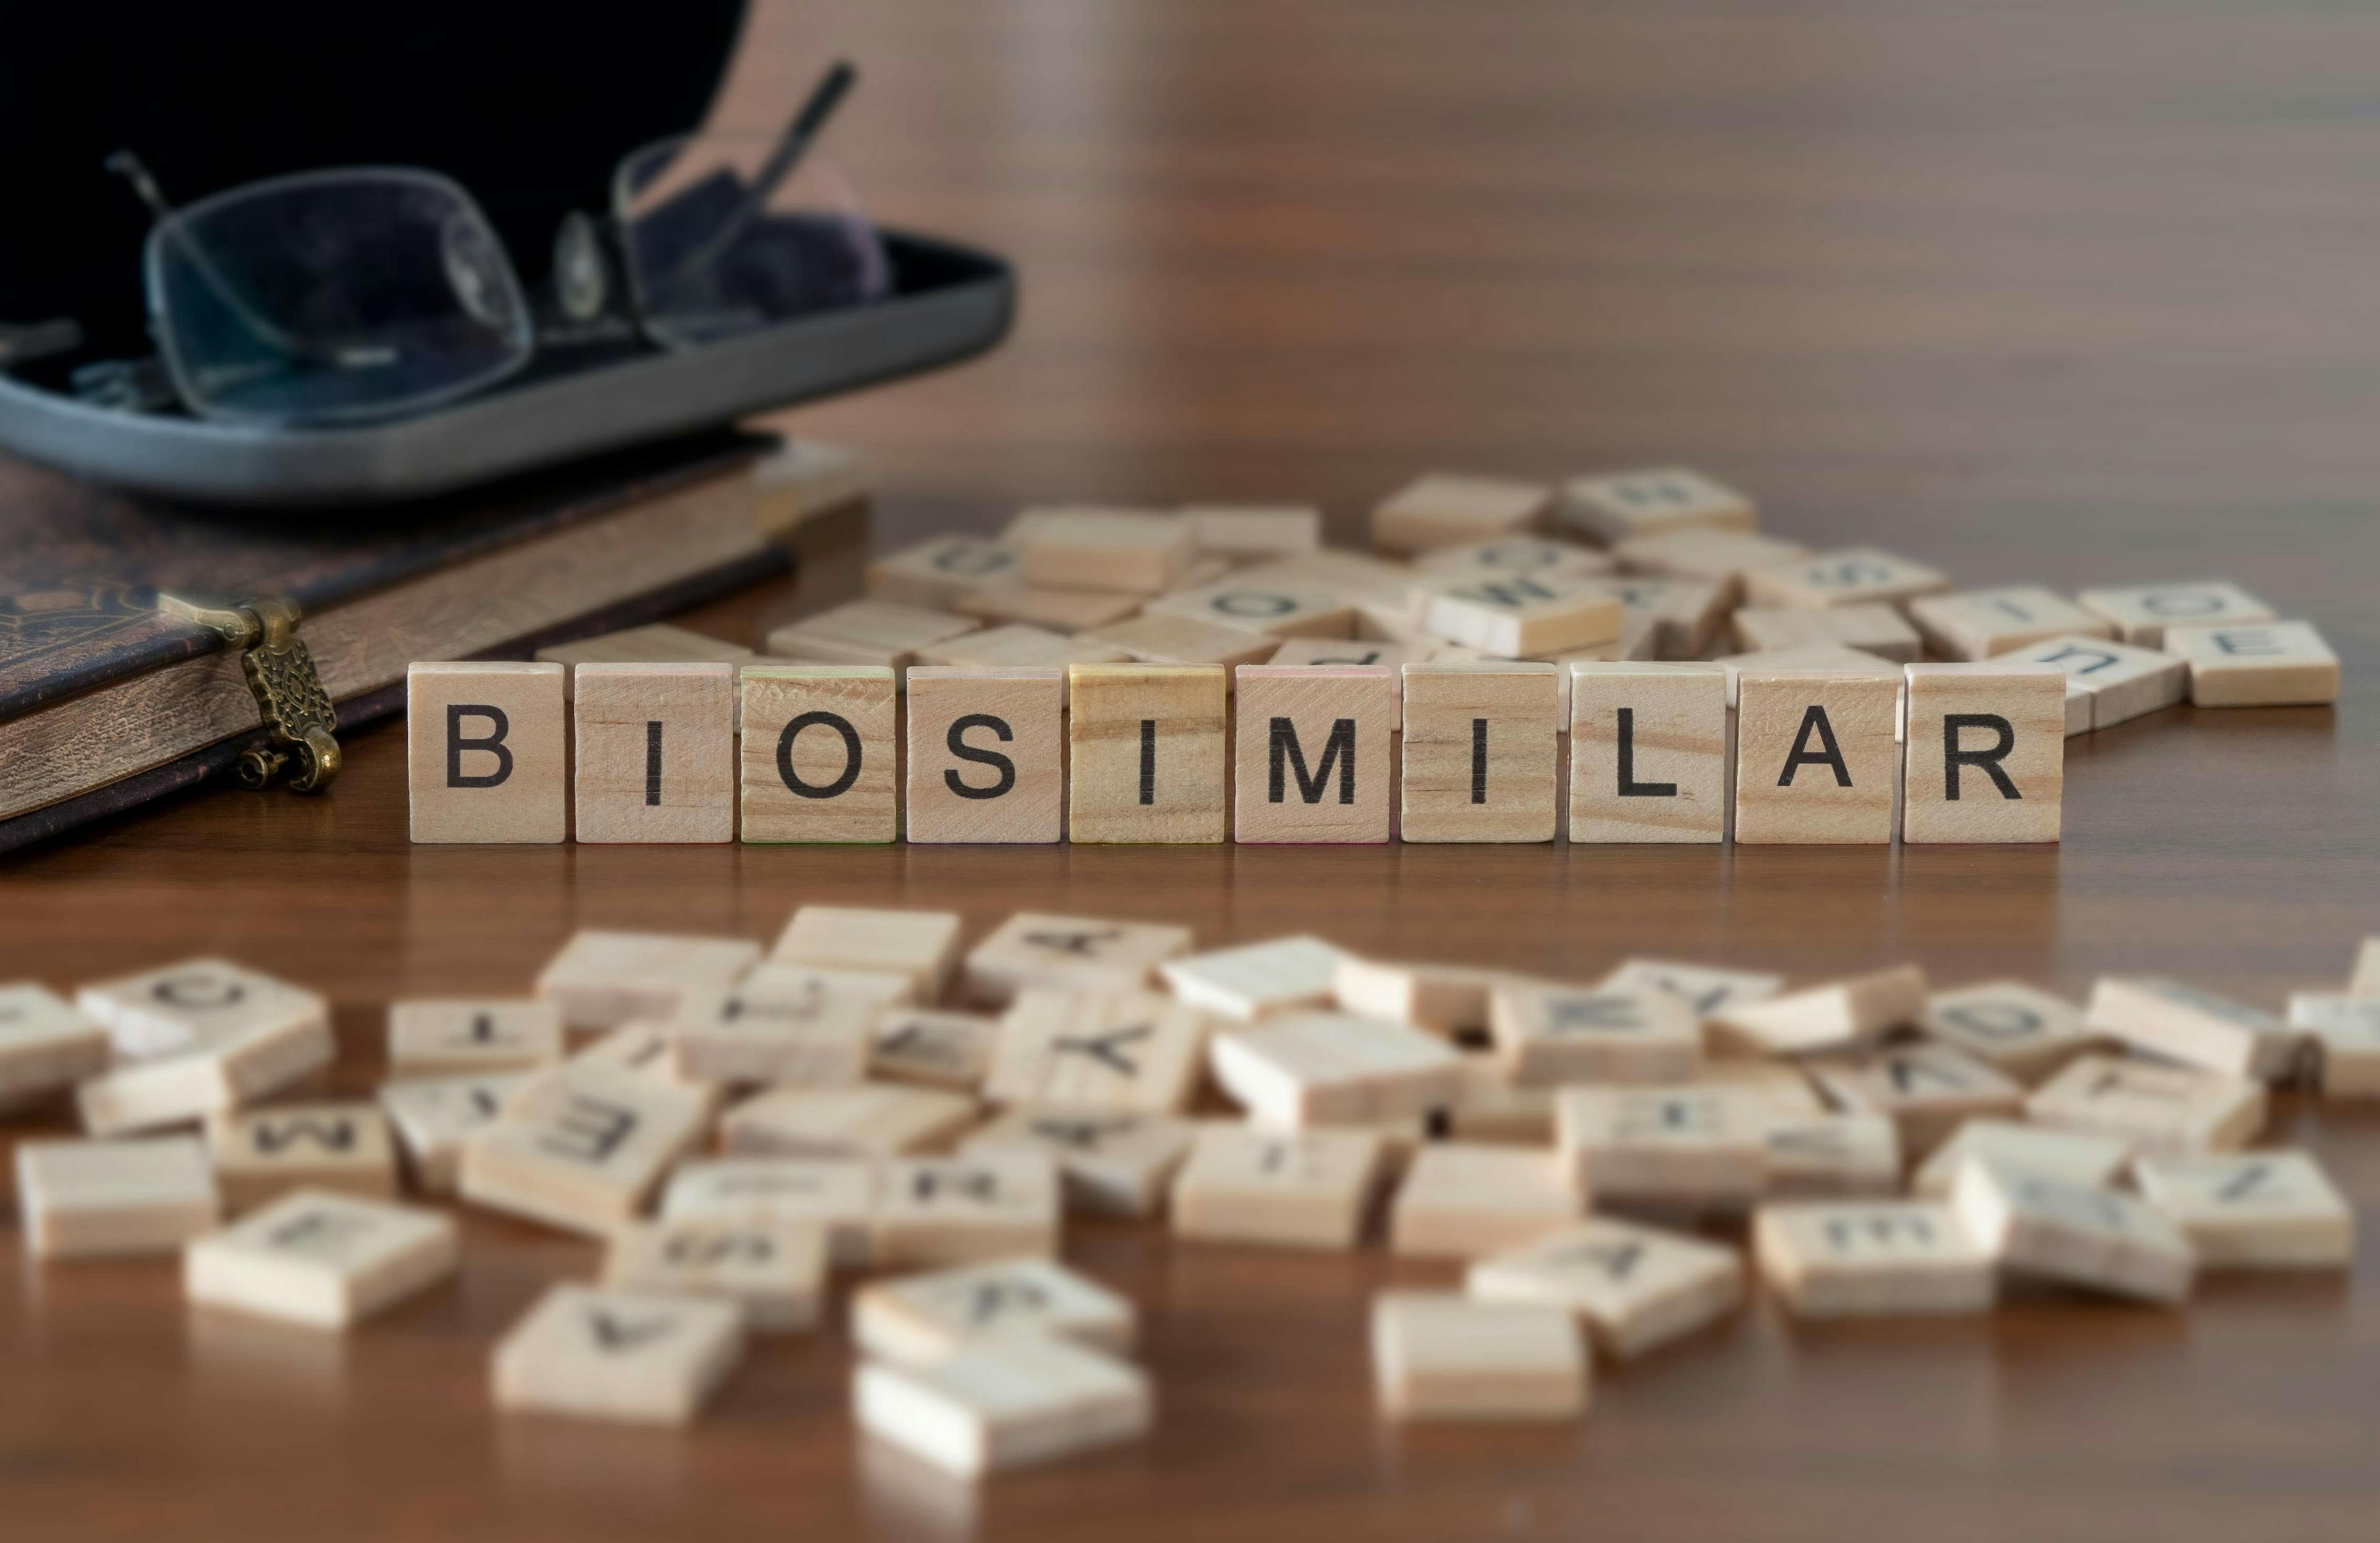 Biosimilar Text With Blocks | image credit: lexiconimages - stock.adobe.com